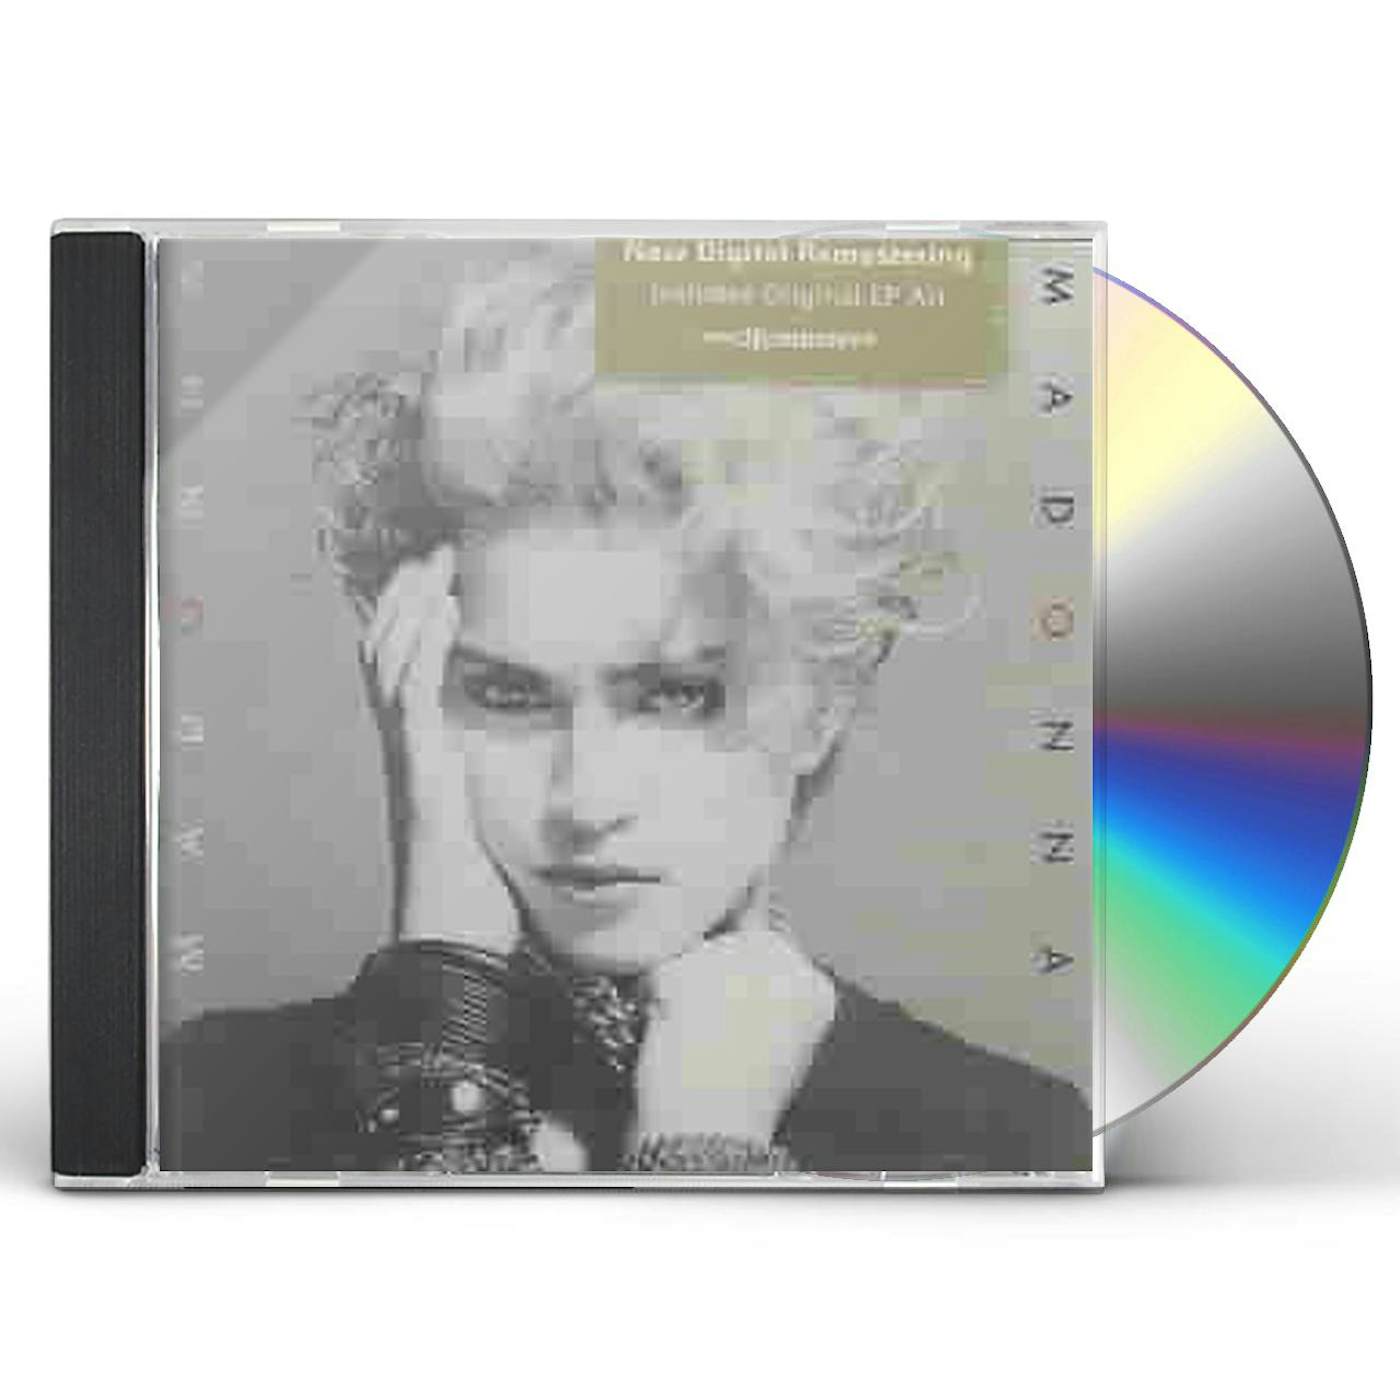 Madonna - Cd Like A Virgin - Remasterizado